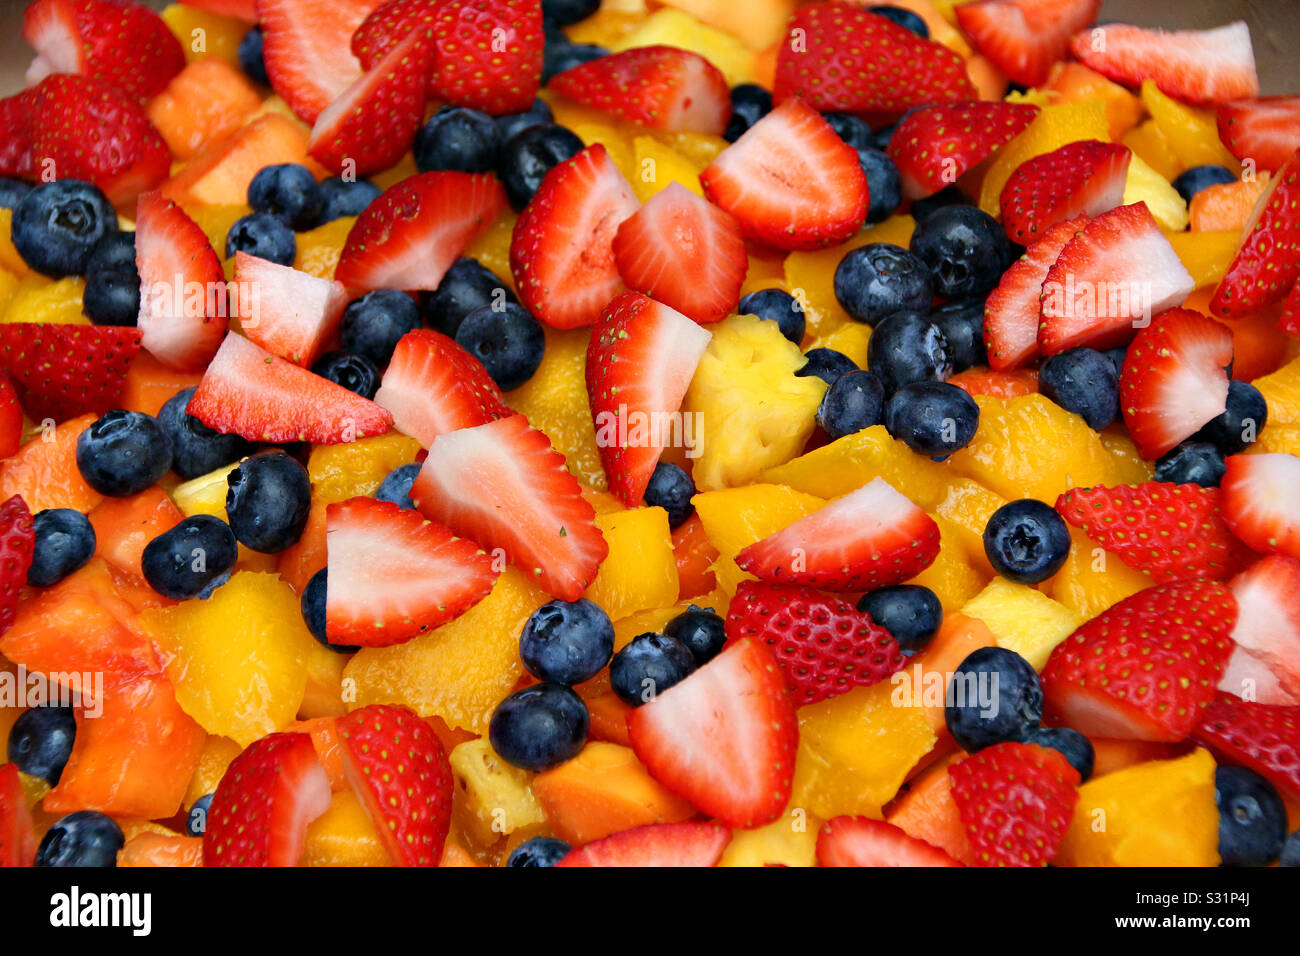 https://c8.alamy.com/comp/S31P4J/closeup-of-a-fruit-salad-with-strawberries-blueberries-orangesmango-melon-and-pineapple-S31P4J.jpg